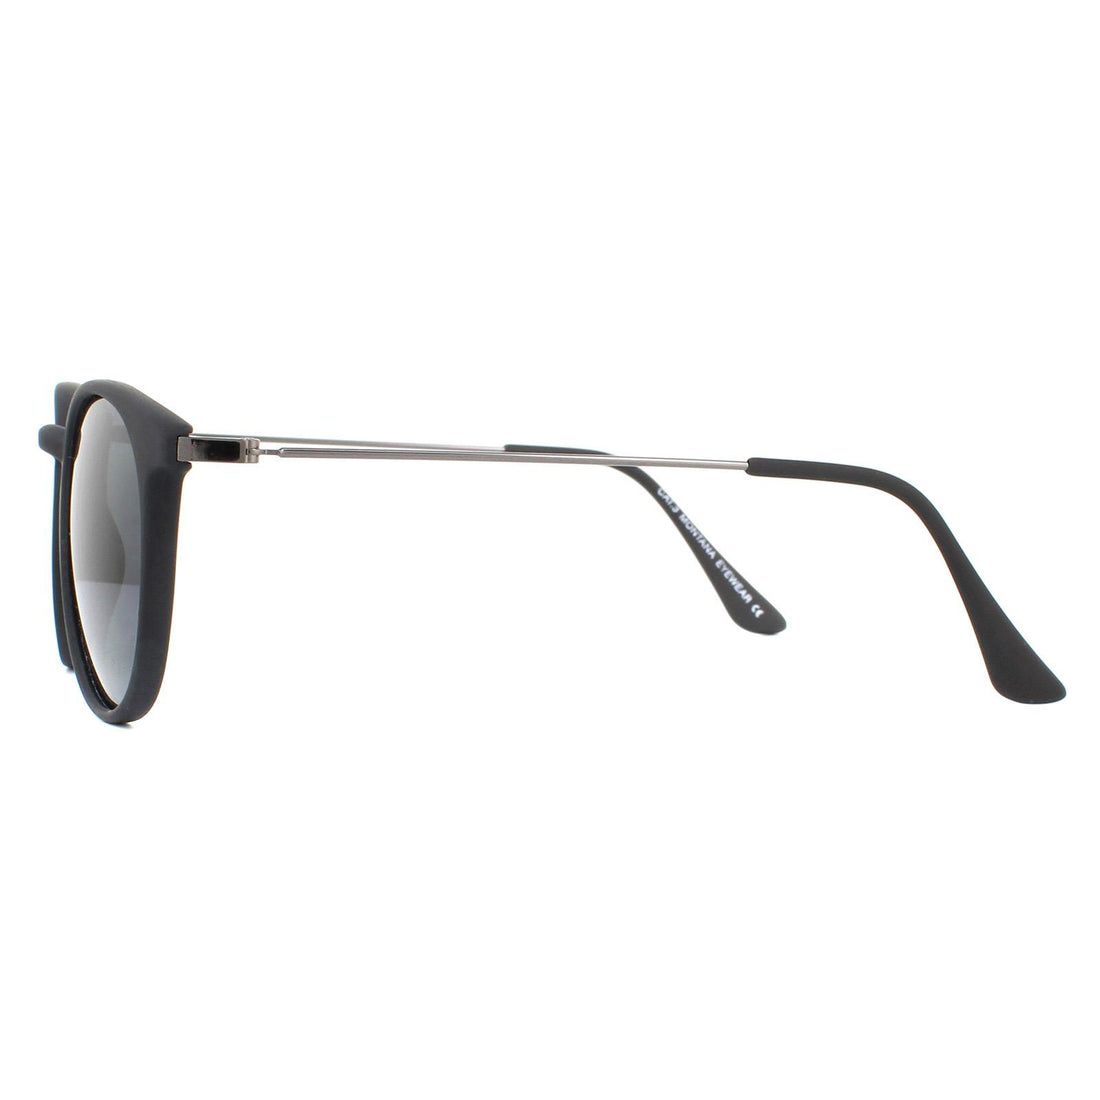 Montana Sunglasses MP33 Black Rubbertouch Black Smoke Polarized